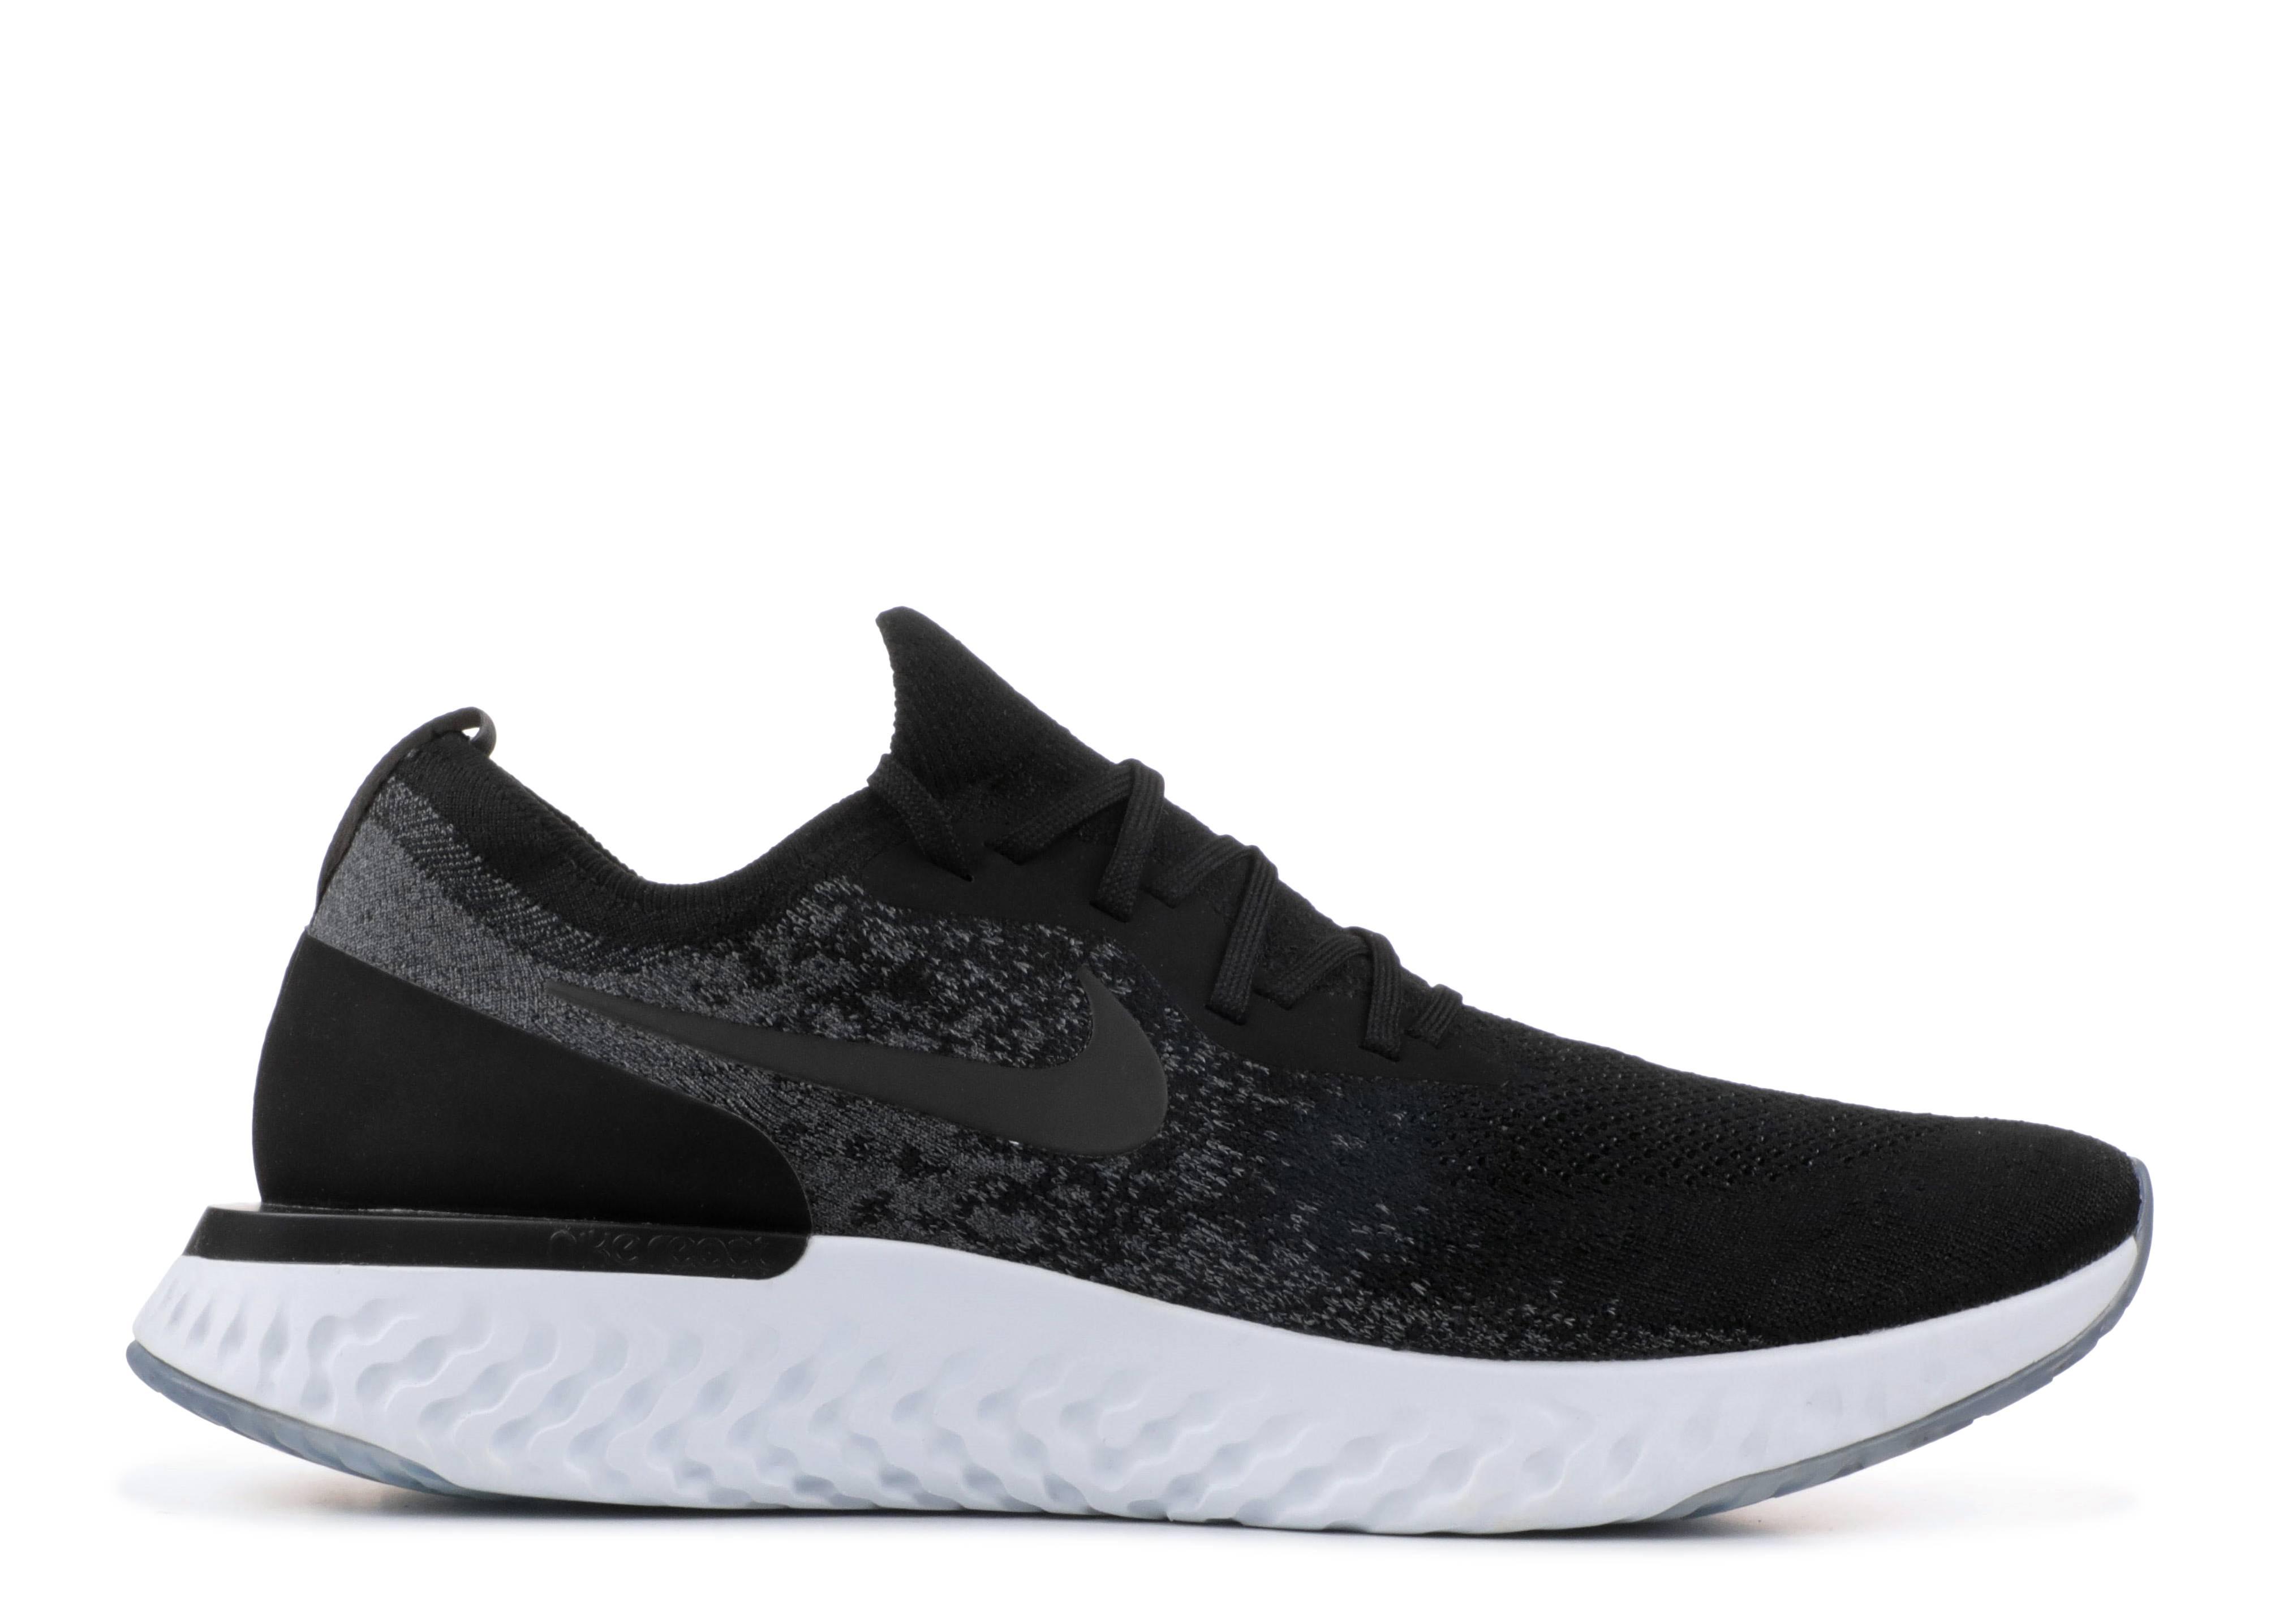 Nike Epic React Flyknit 1 Running Shoe in Black/Blue (Black) for Men - Save  71% - Lyst